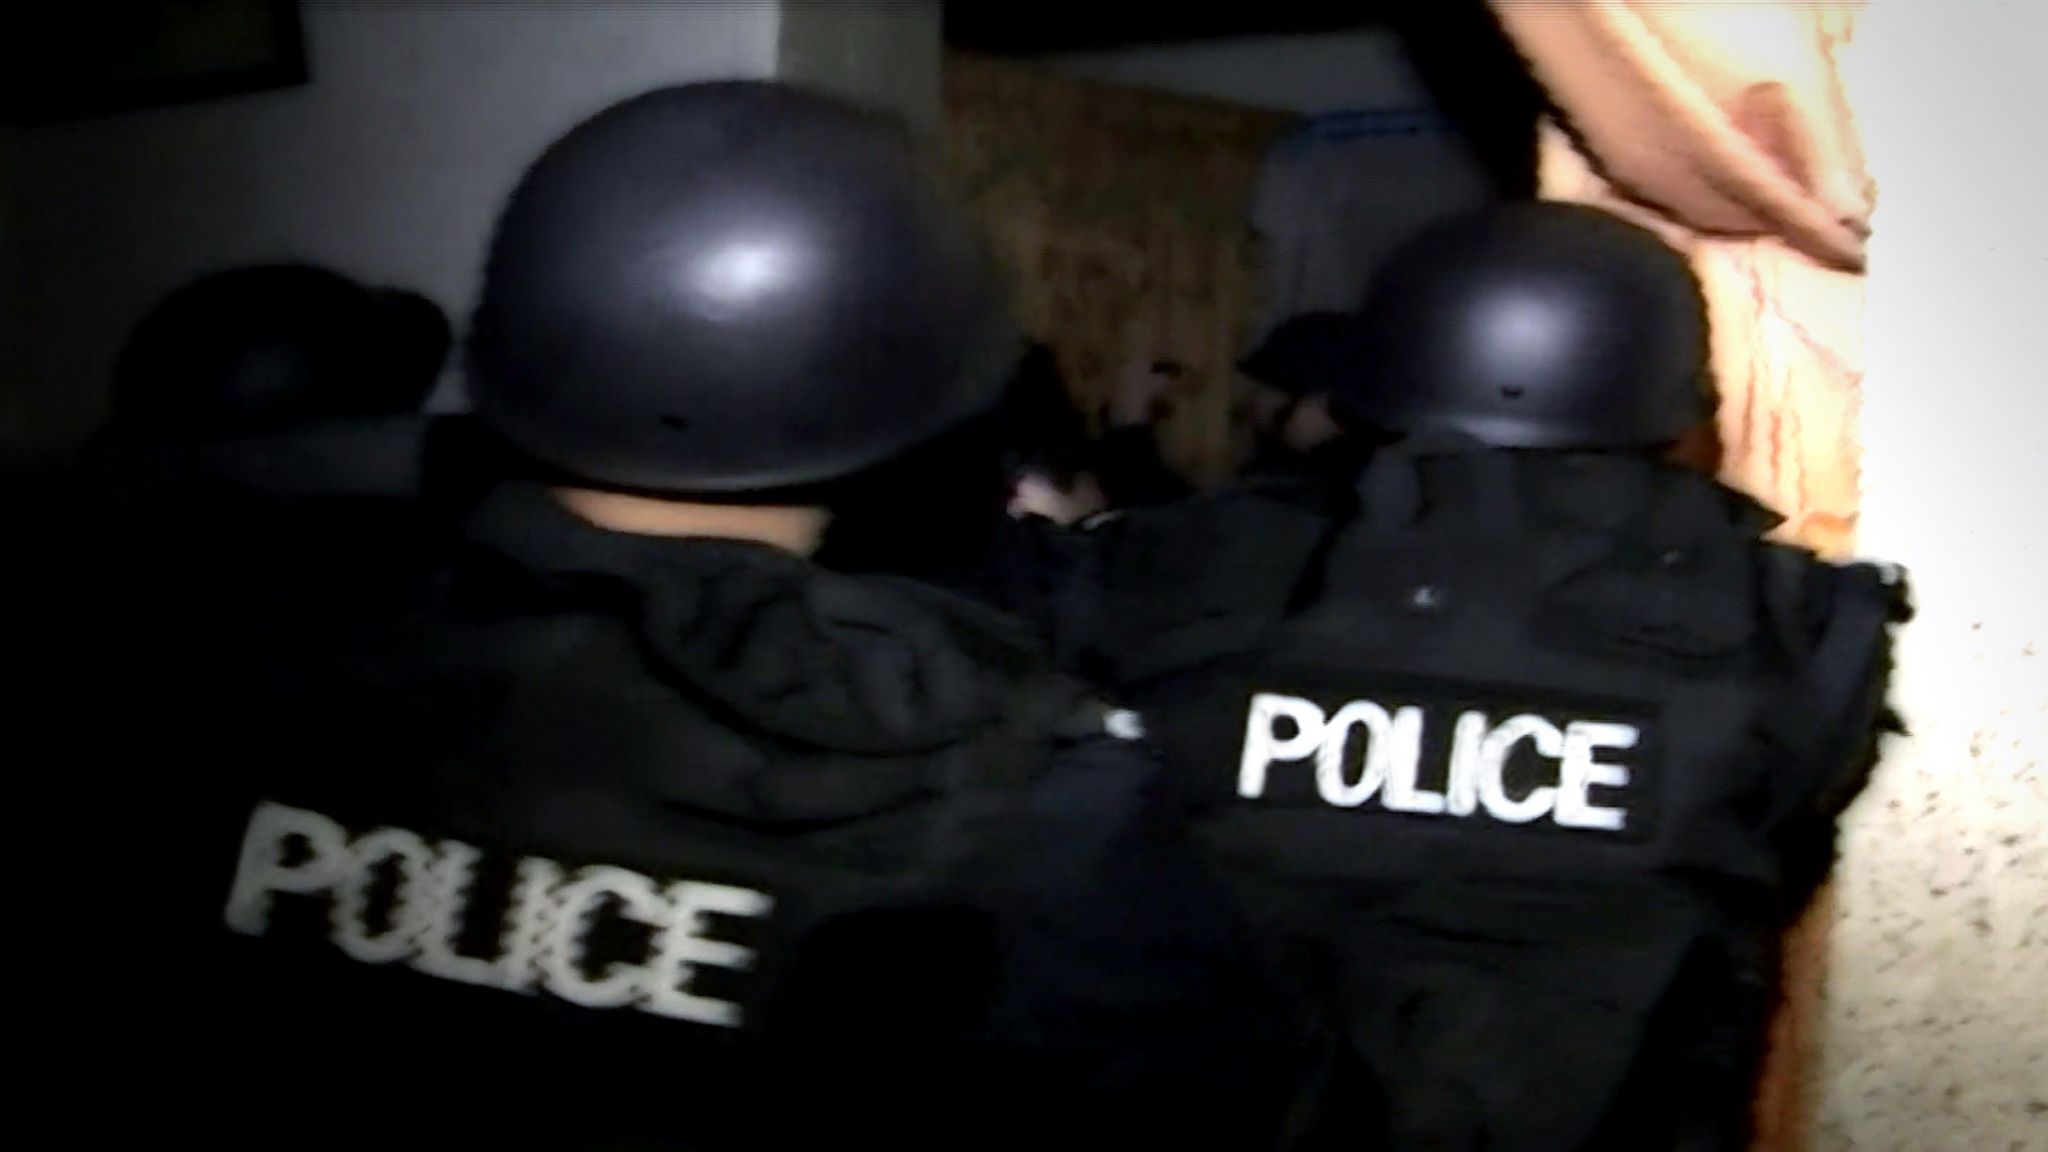 Chinese police make a drugs raid